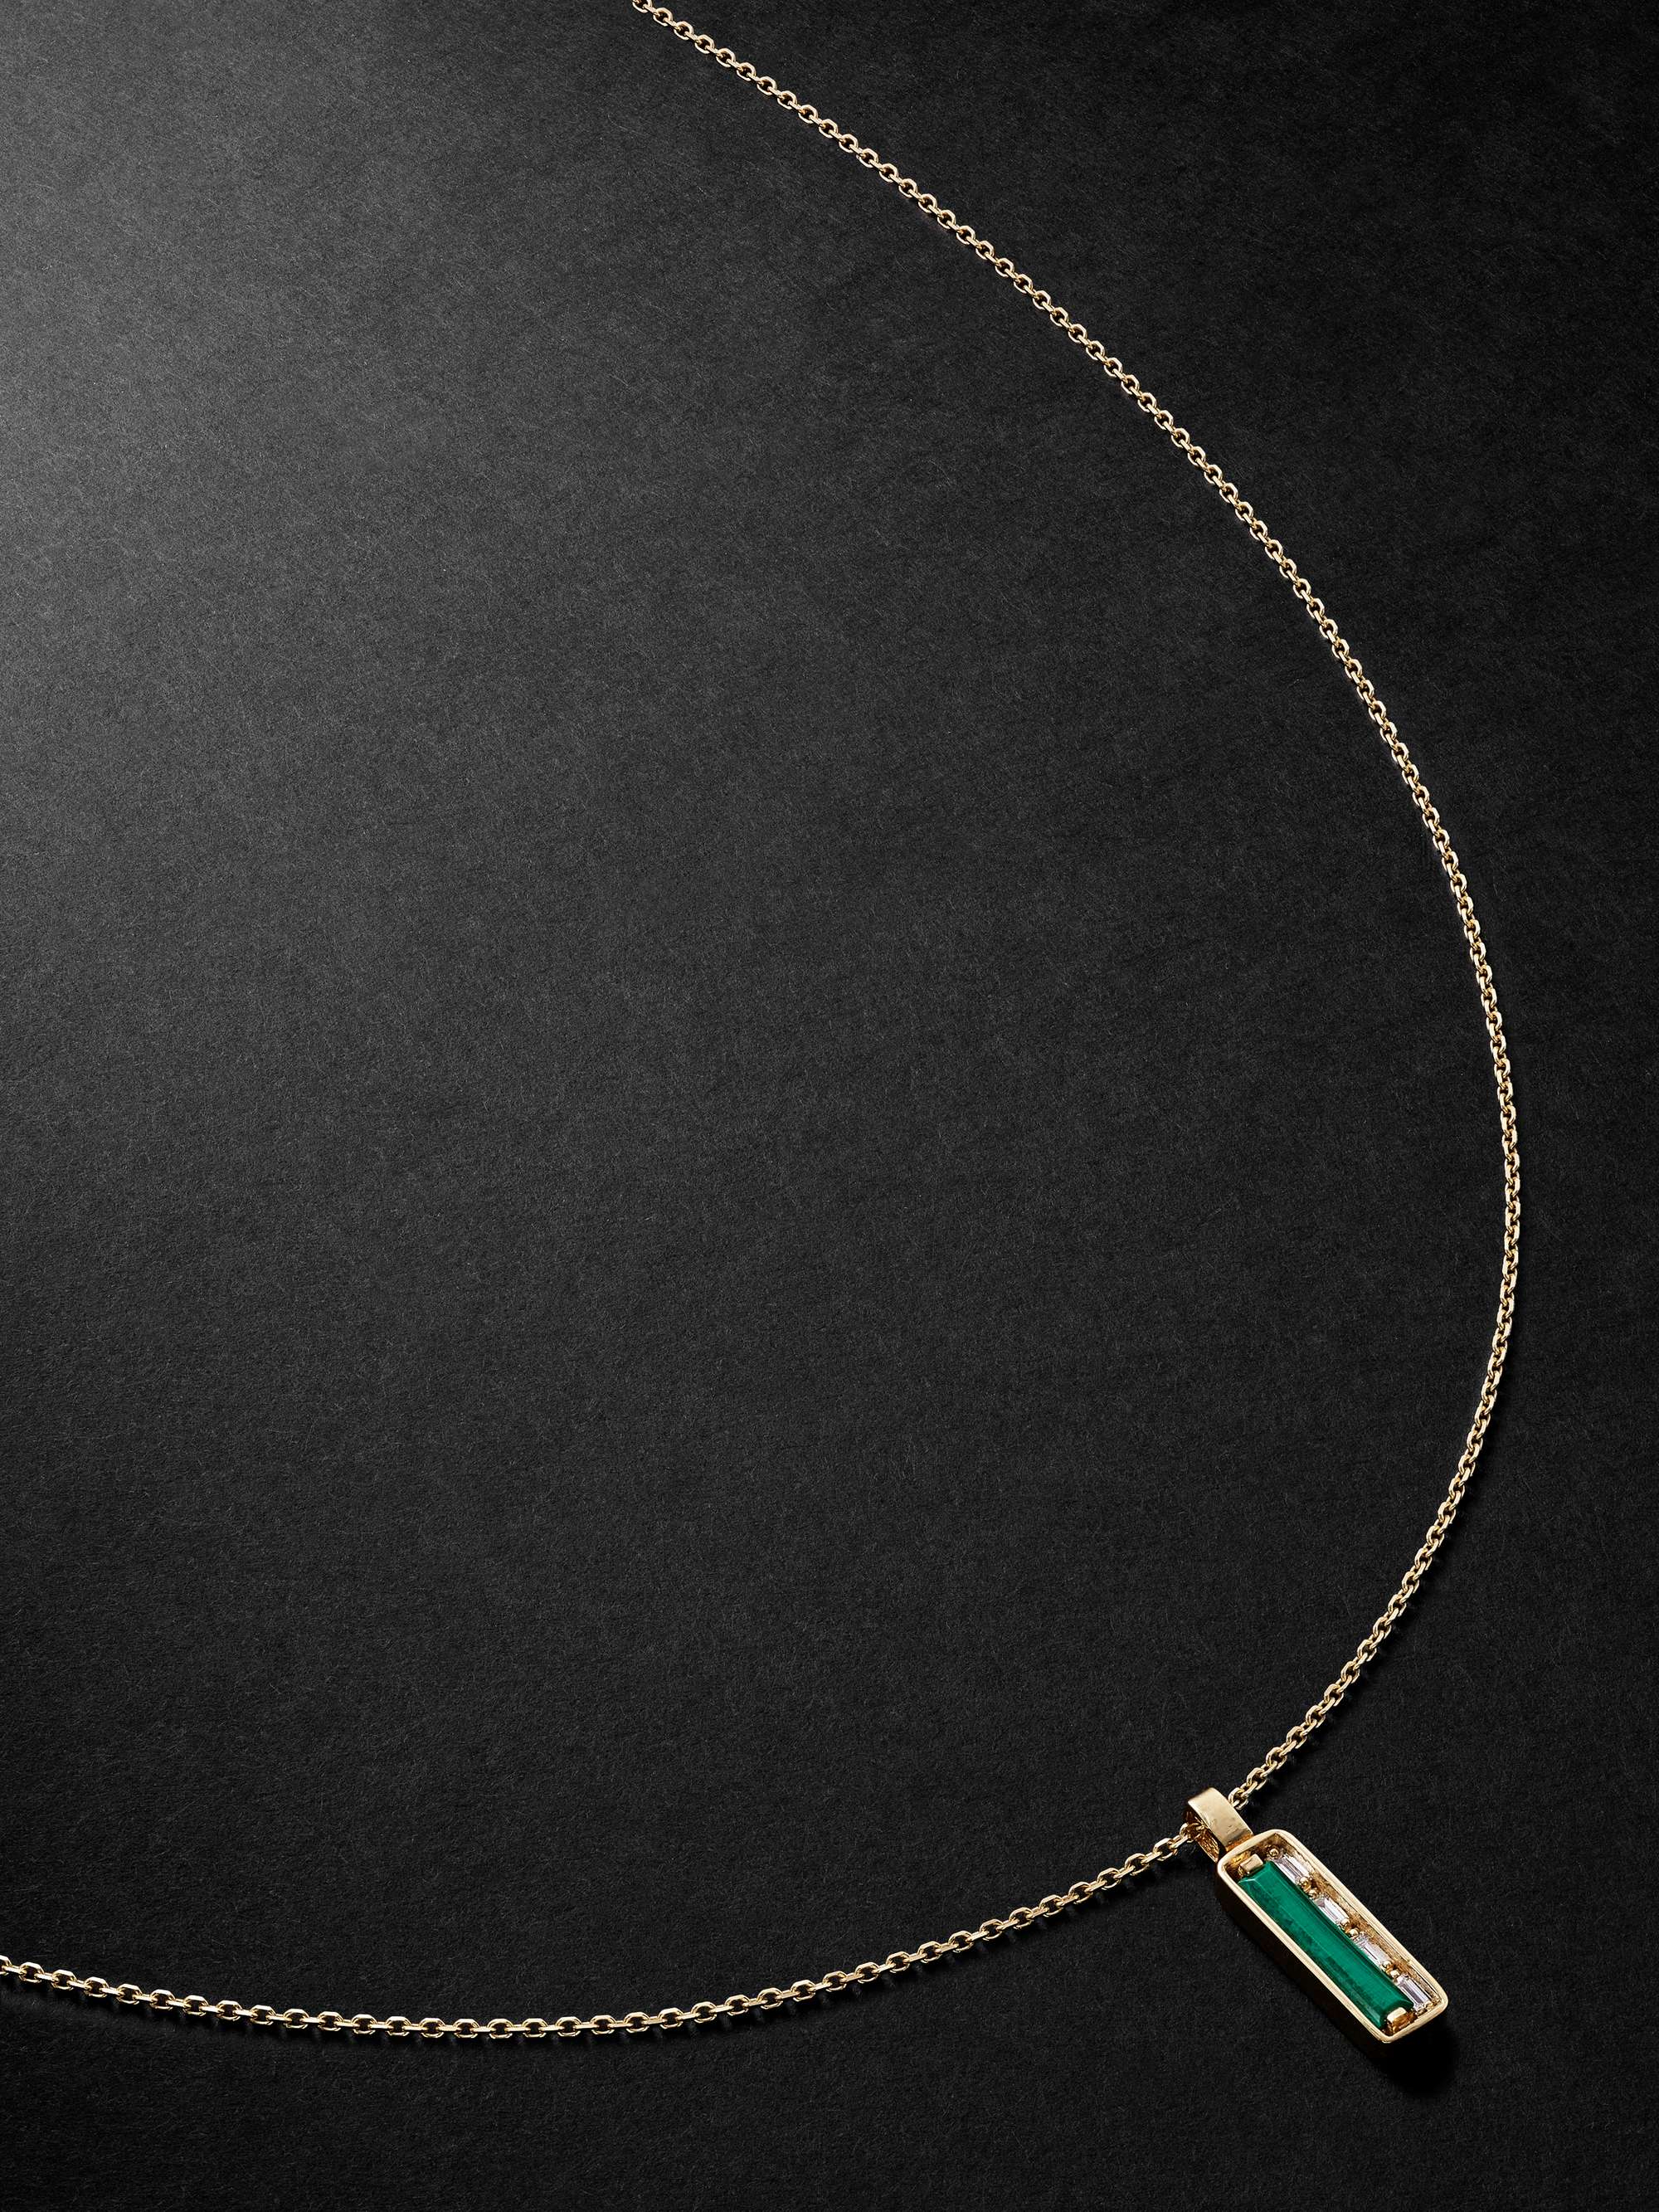 SUZANNE KALAN Gold, Malachite and Diamond Pendant Necklace